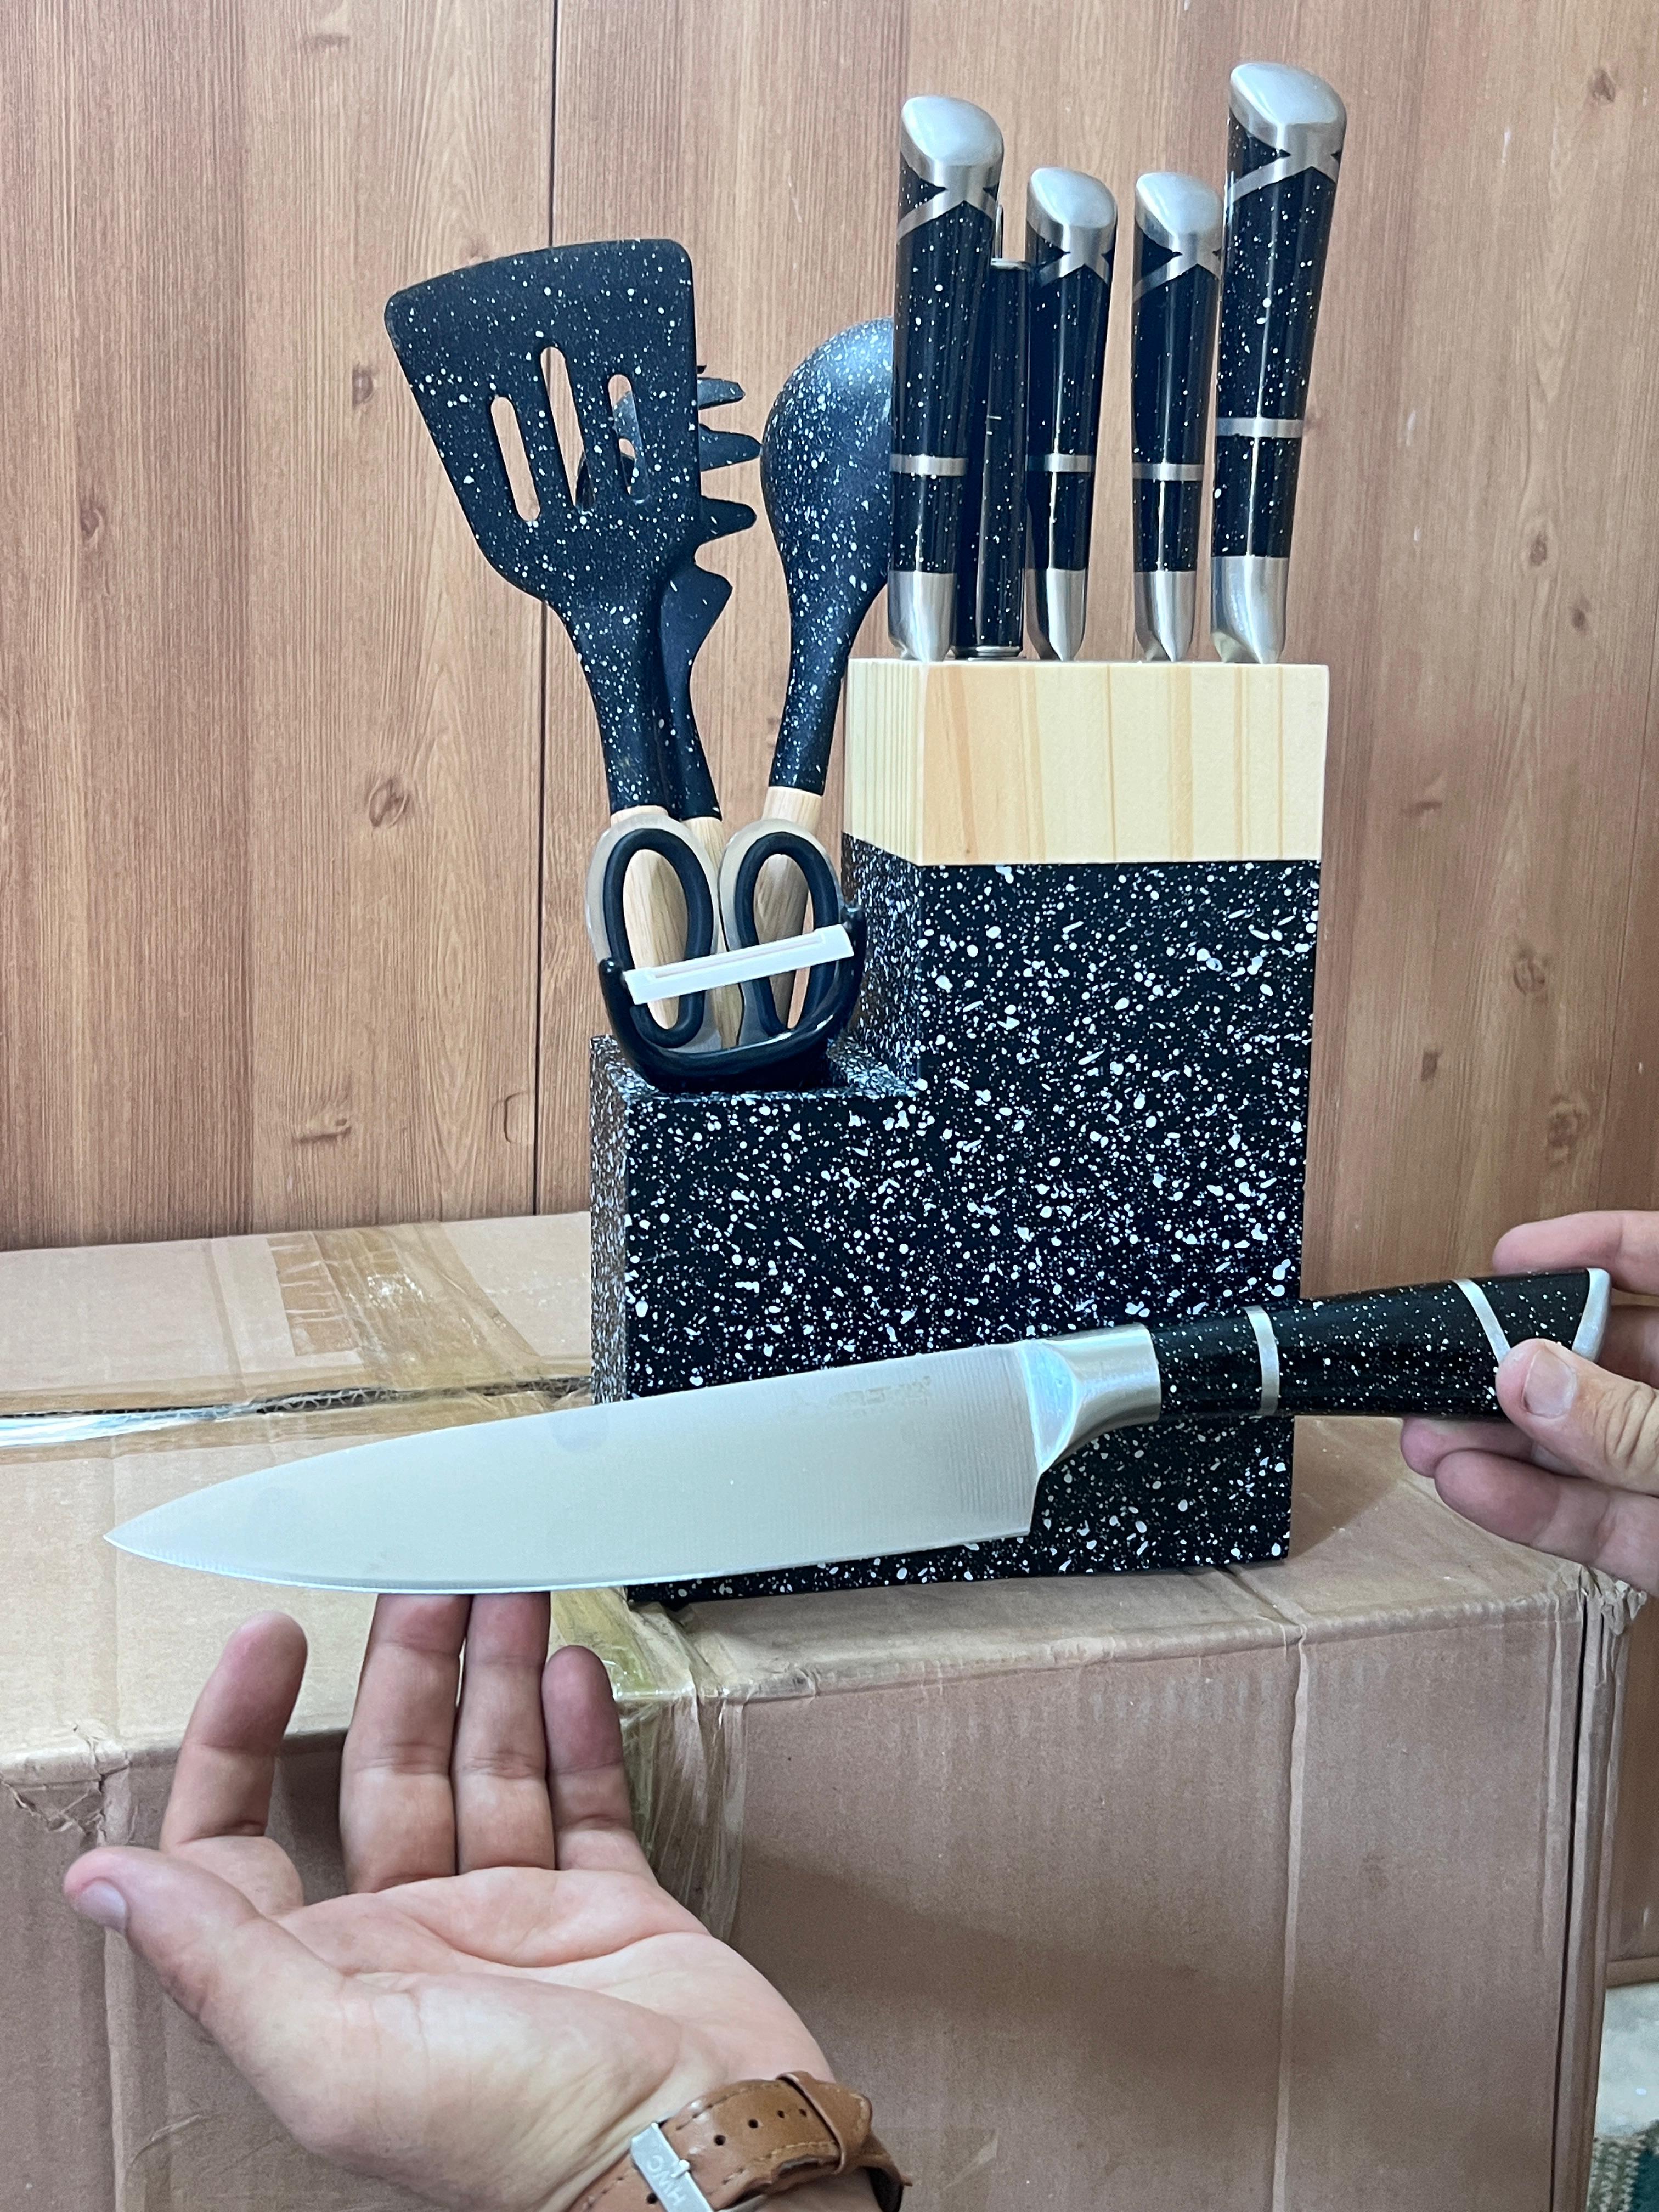 Lot Imported ARSHIA Knife Set 12PCs